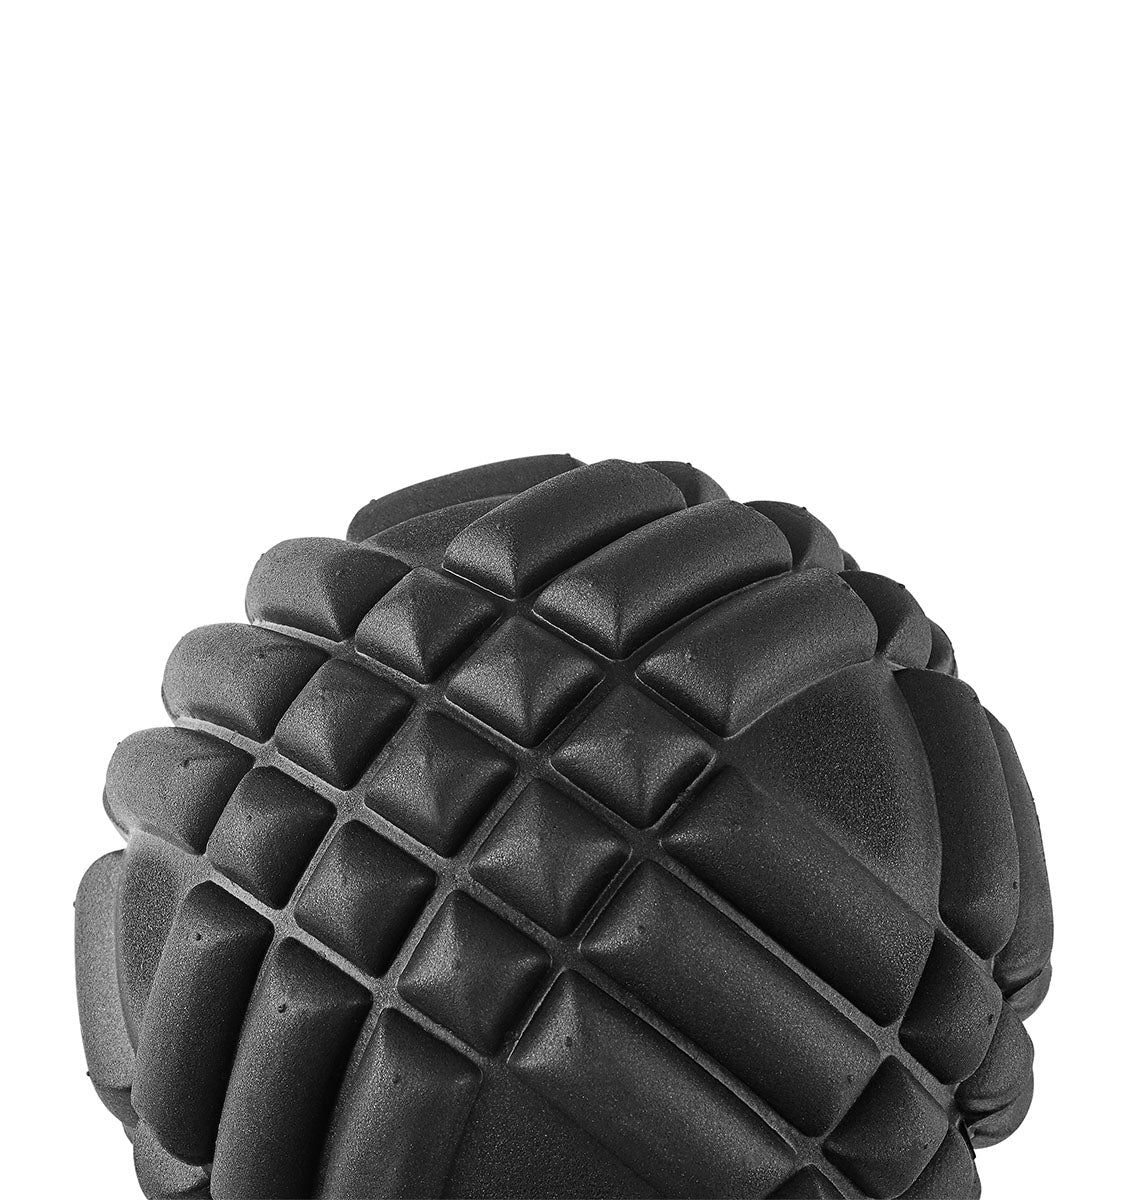 TriggerPoint GRID Massage Ball X - Black - 2